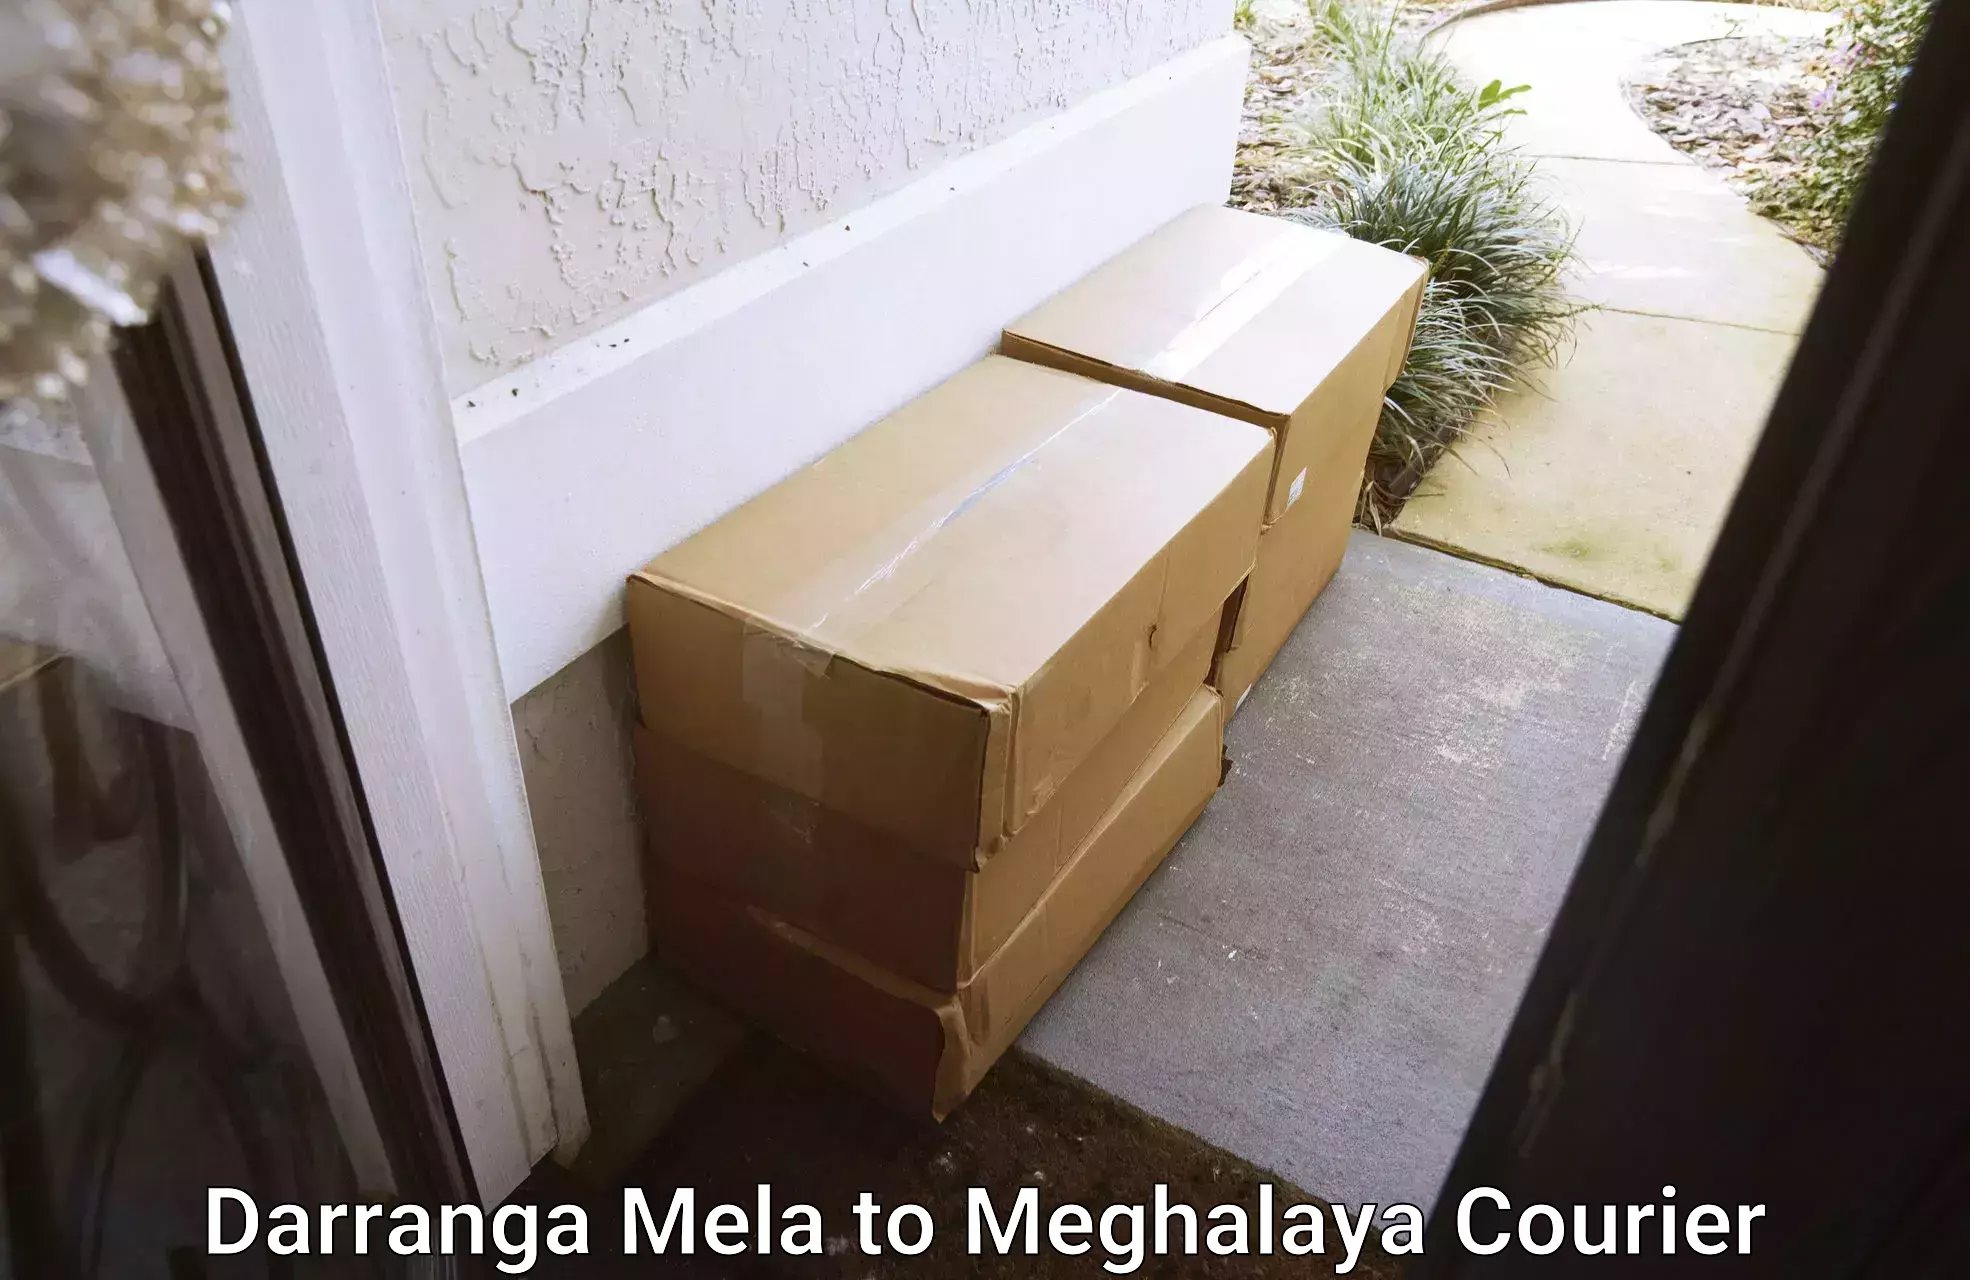 Express delivery capabilities Darranga Mela to Phulbari